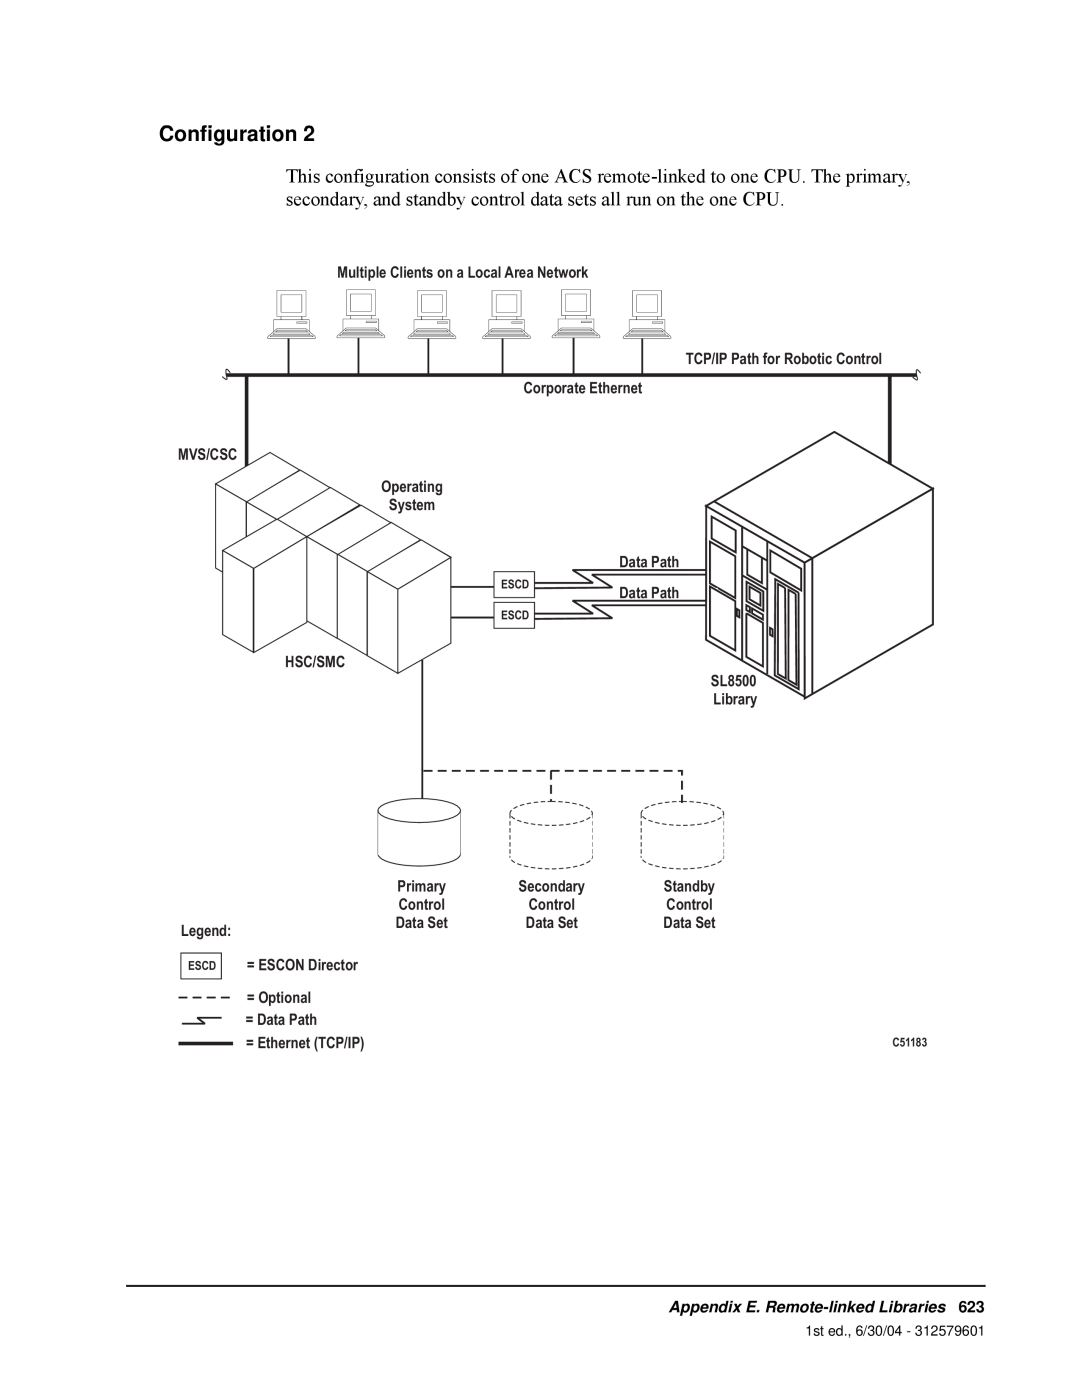 StorageTek 6 manual Configuration, Mvs/Csc, Appendix E. Remote-linkedLibraries 